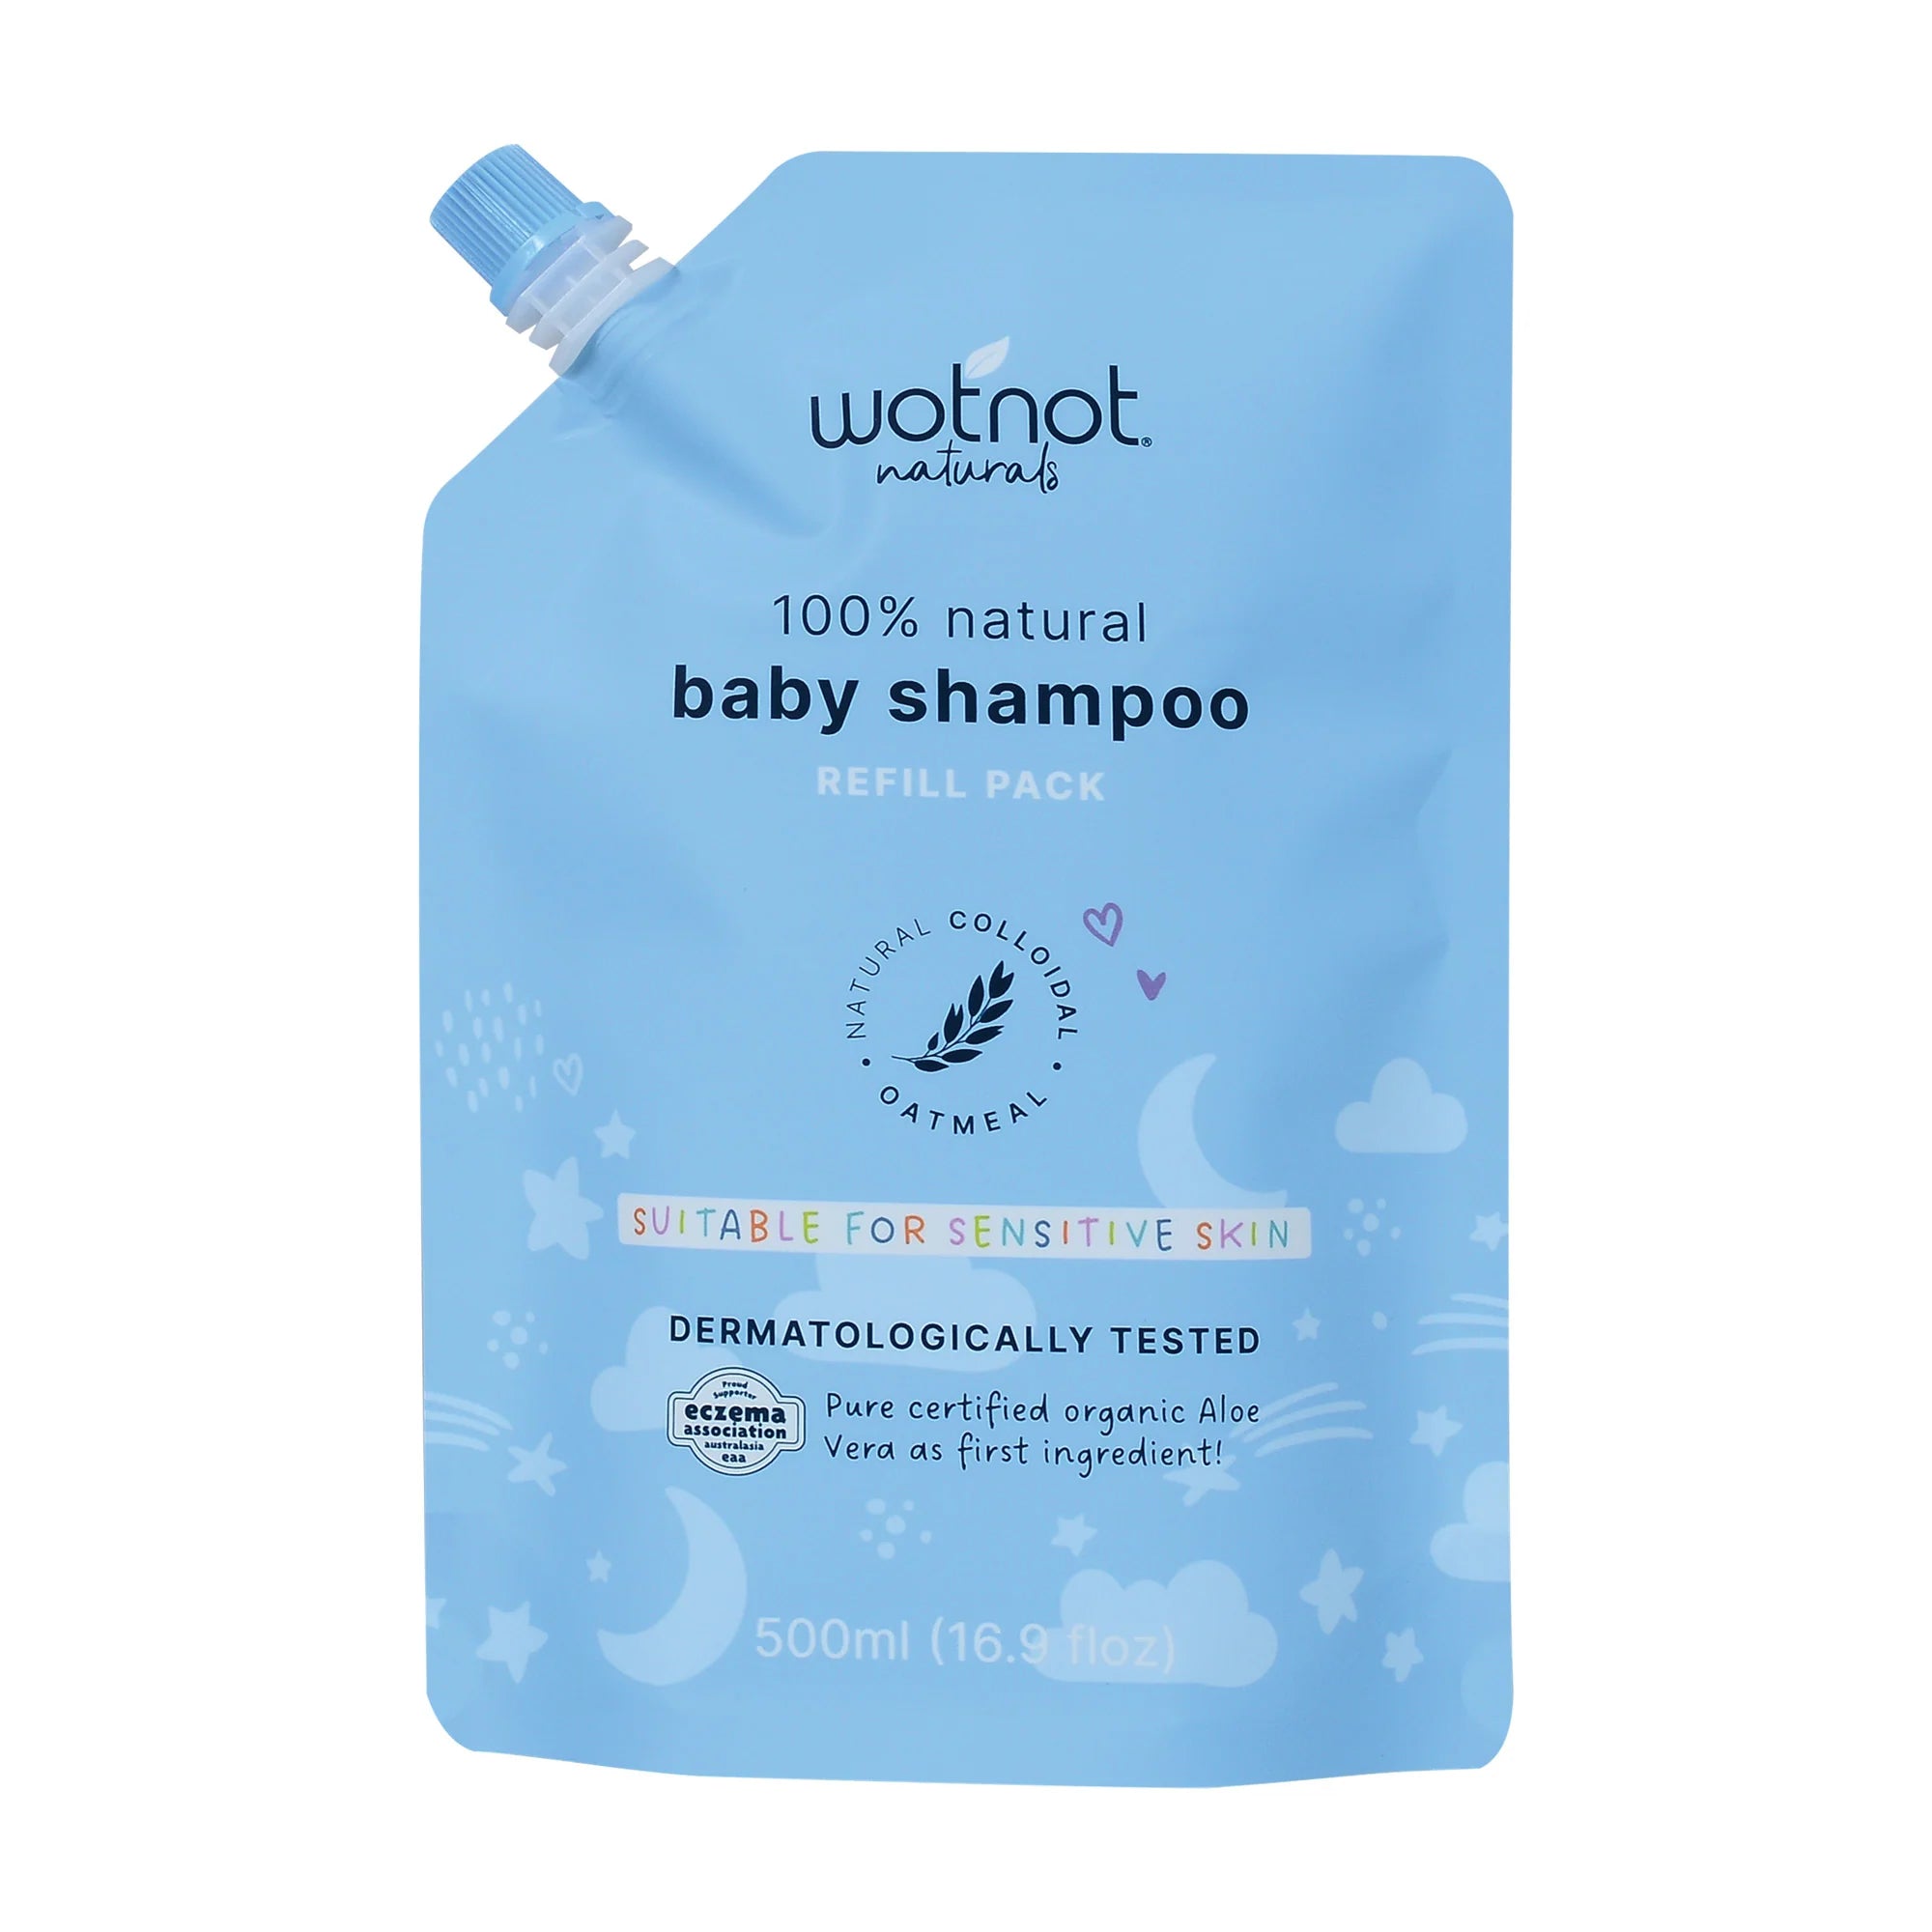 Wotnot 100% Natural Baby Shampoo Refill